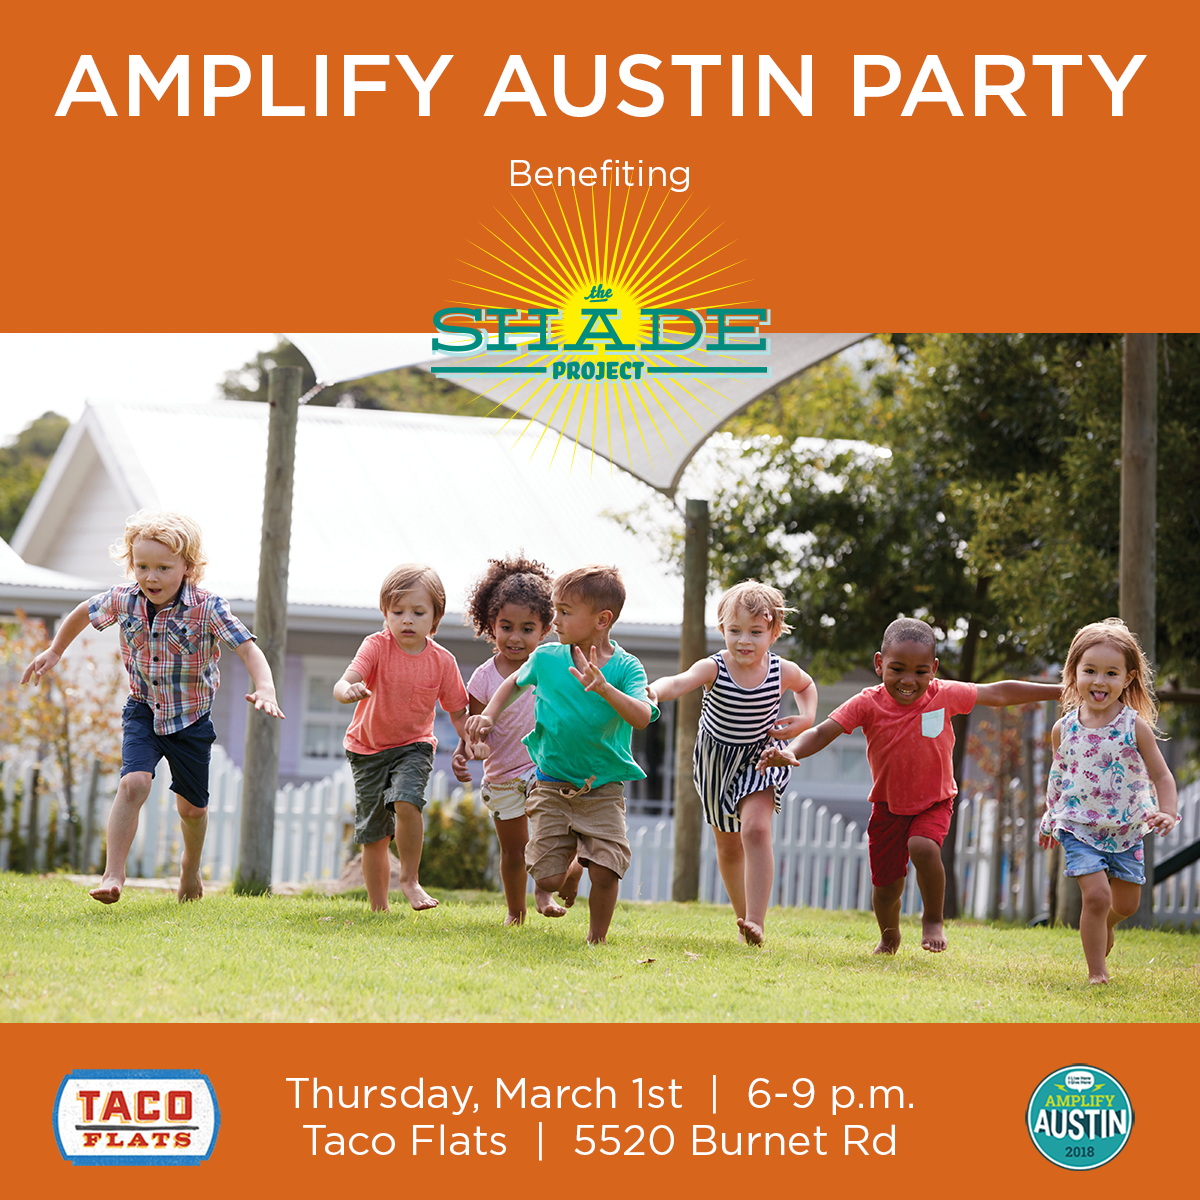 Amplify Austin Party